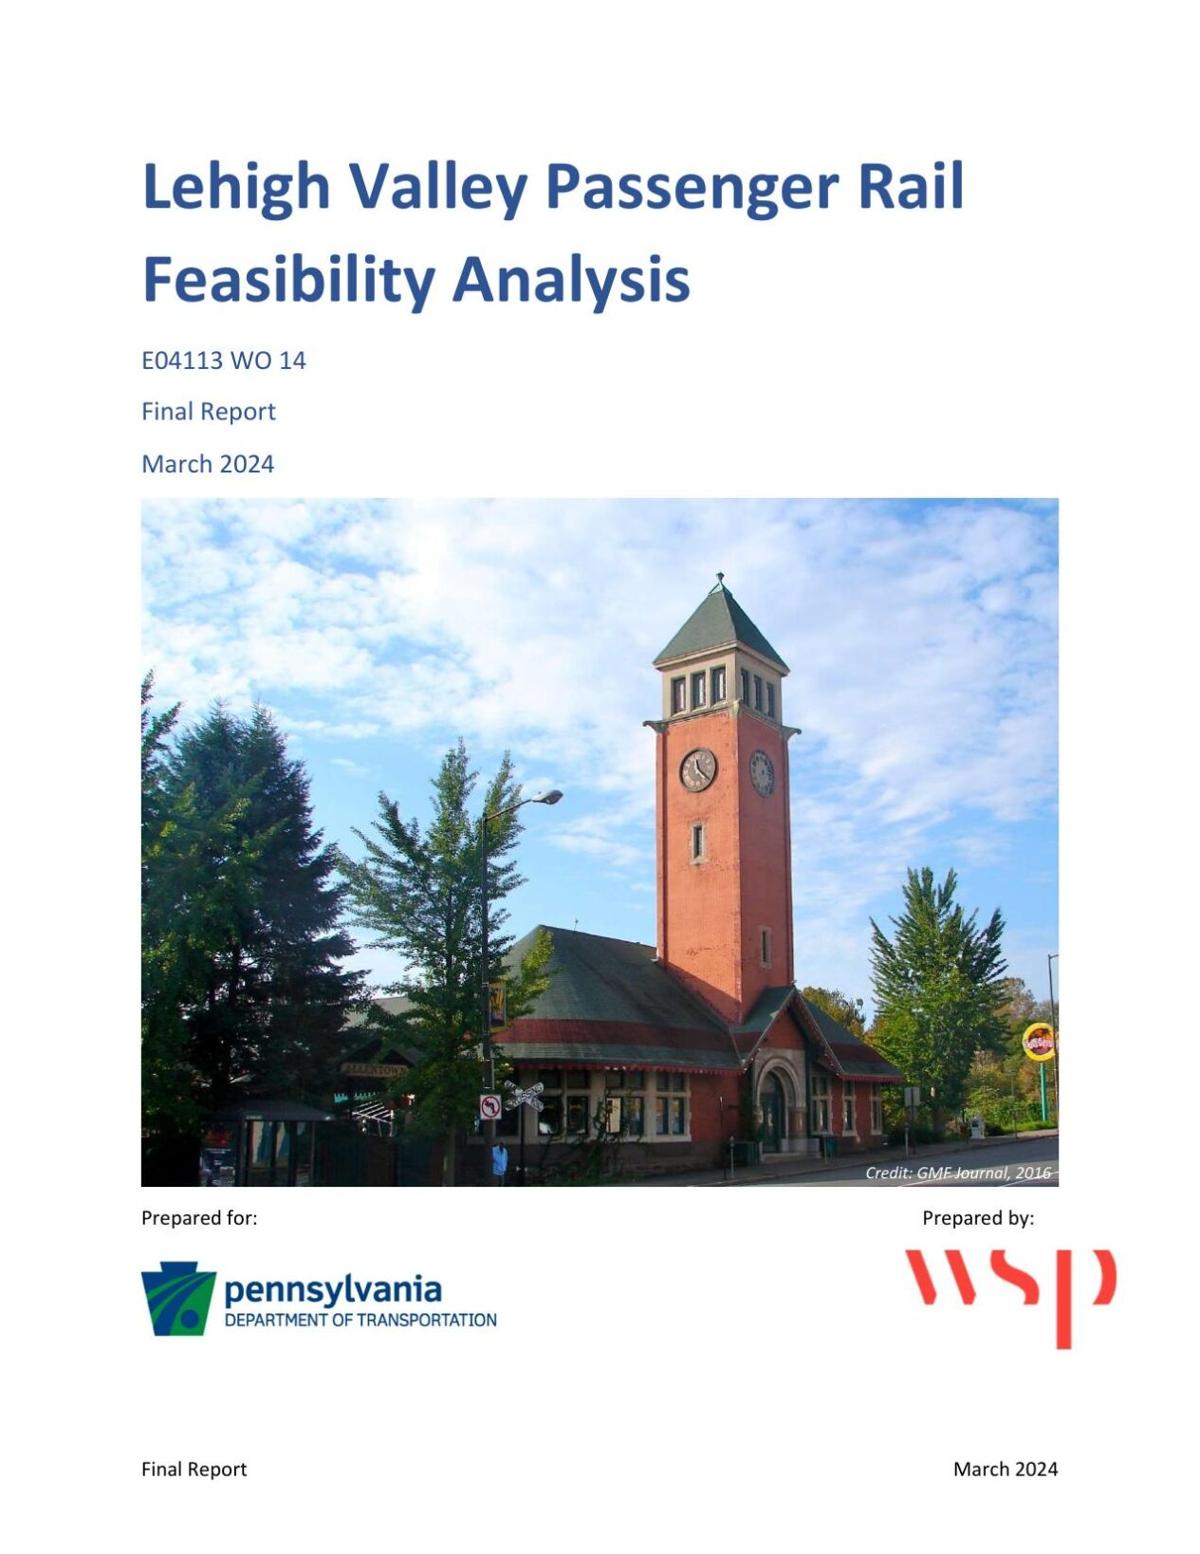 READ: Lehigh Valley Passenger Rail Feasibility Analysis